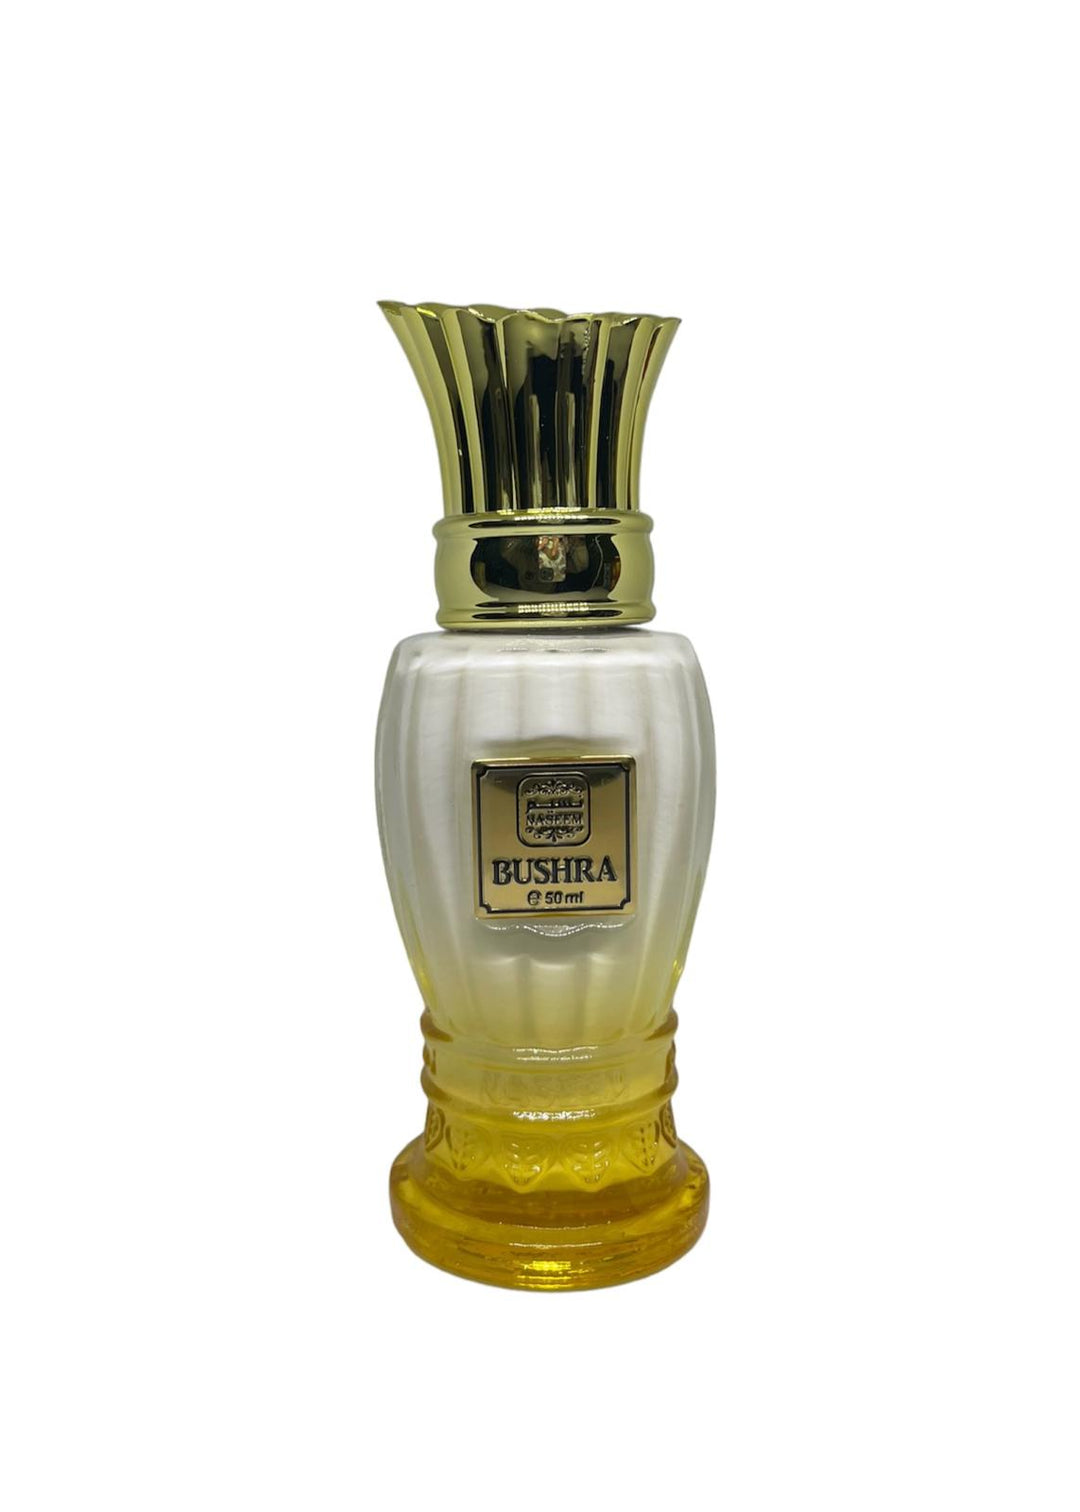 Naseem Bushra Water Based Perfume 50ml